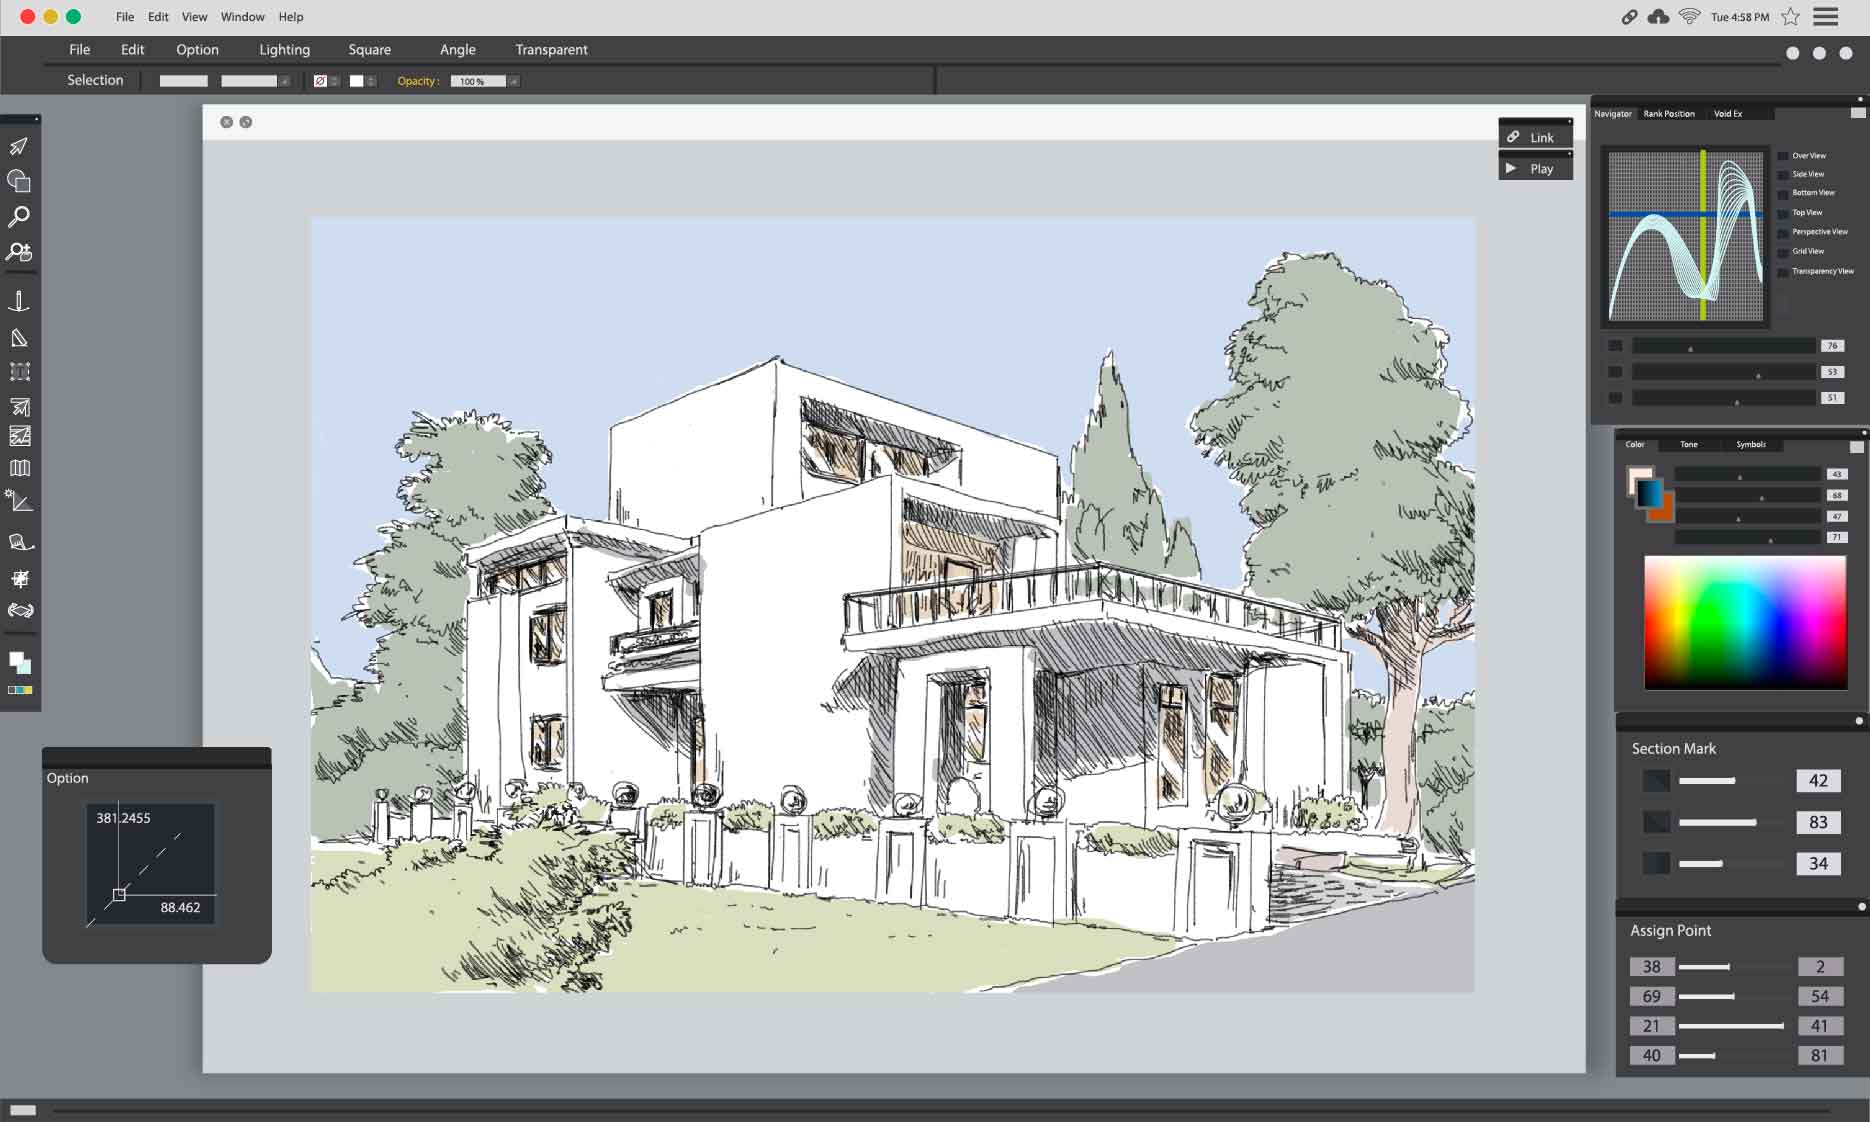 Illustration of house planning